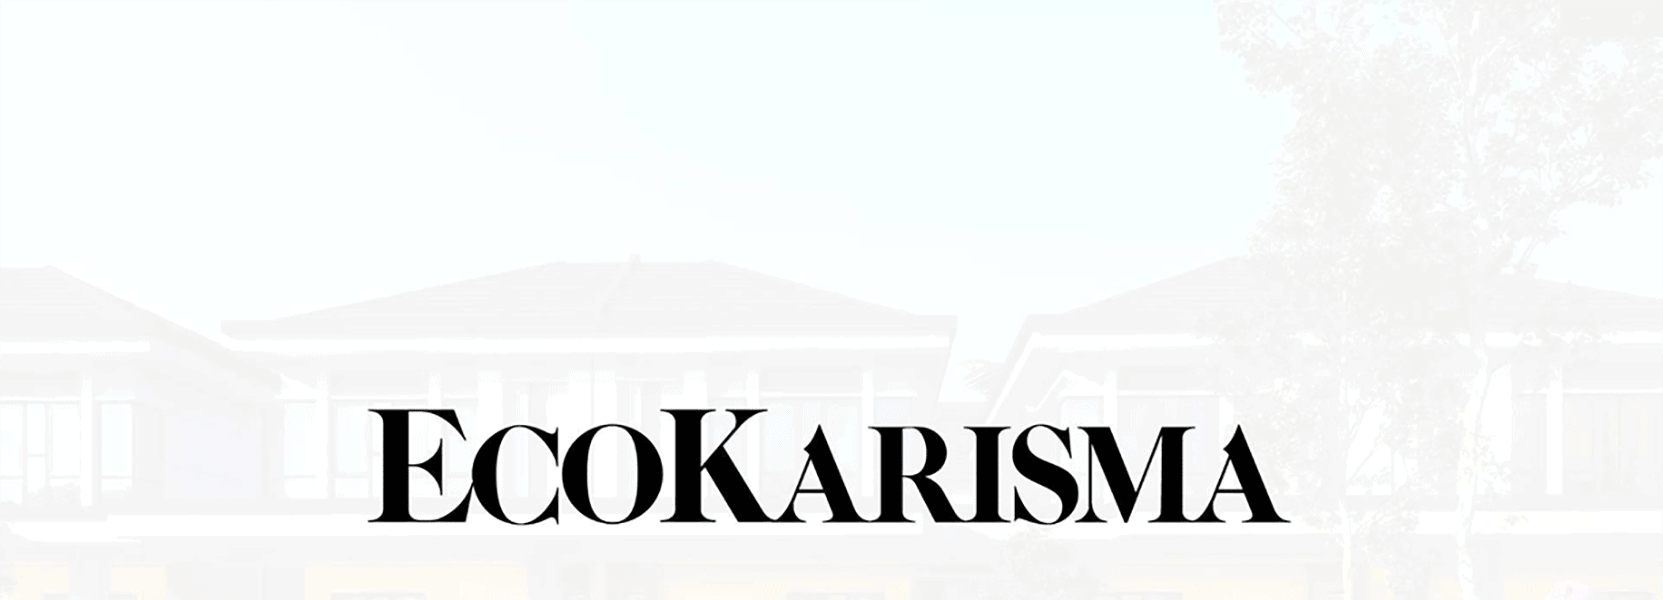 EcoKarisma-Mock-Up__01